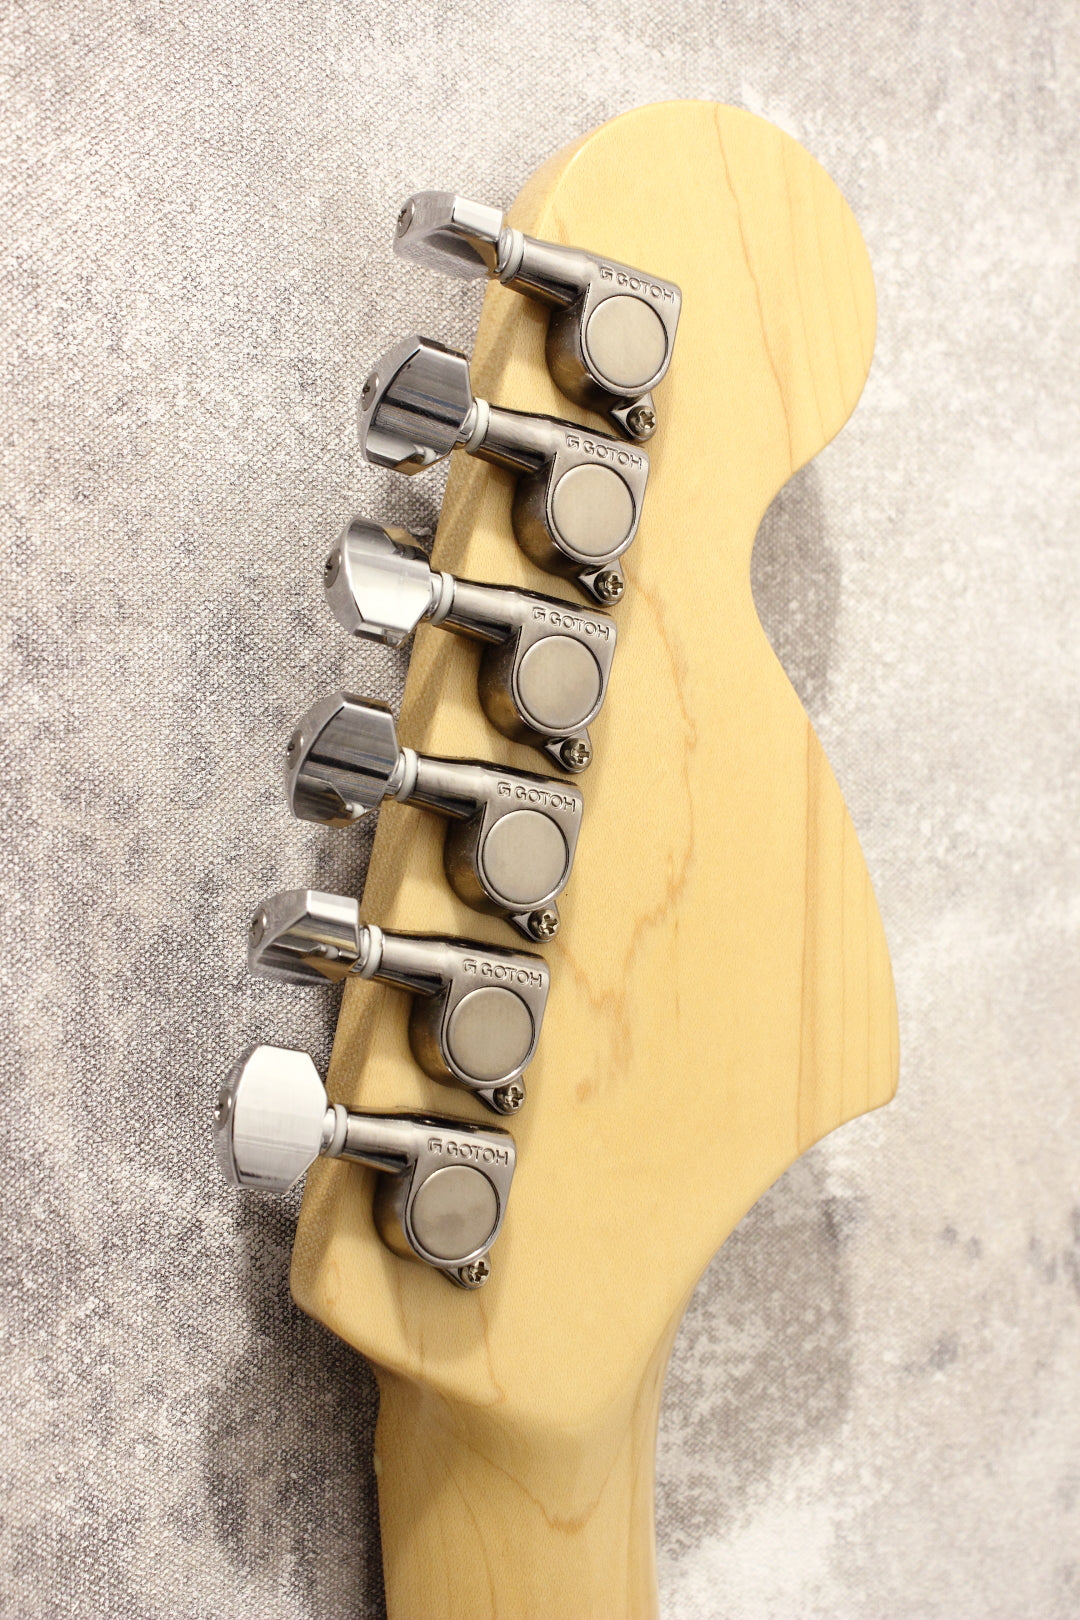 Fender Japan Left Handed '72 Stratocaster ST72/LH Vintage White 2010